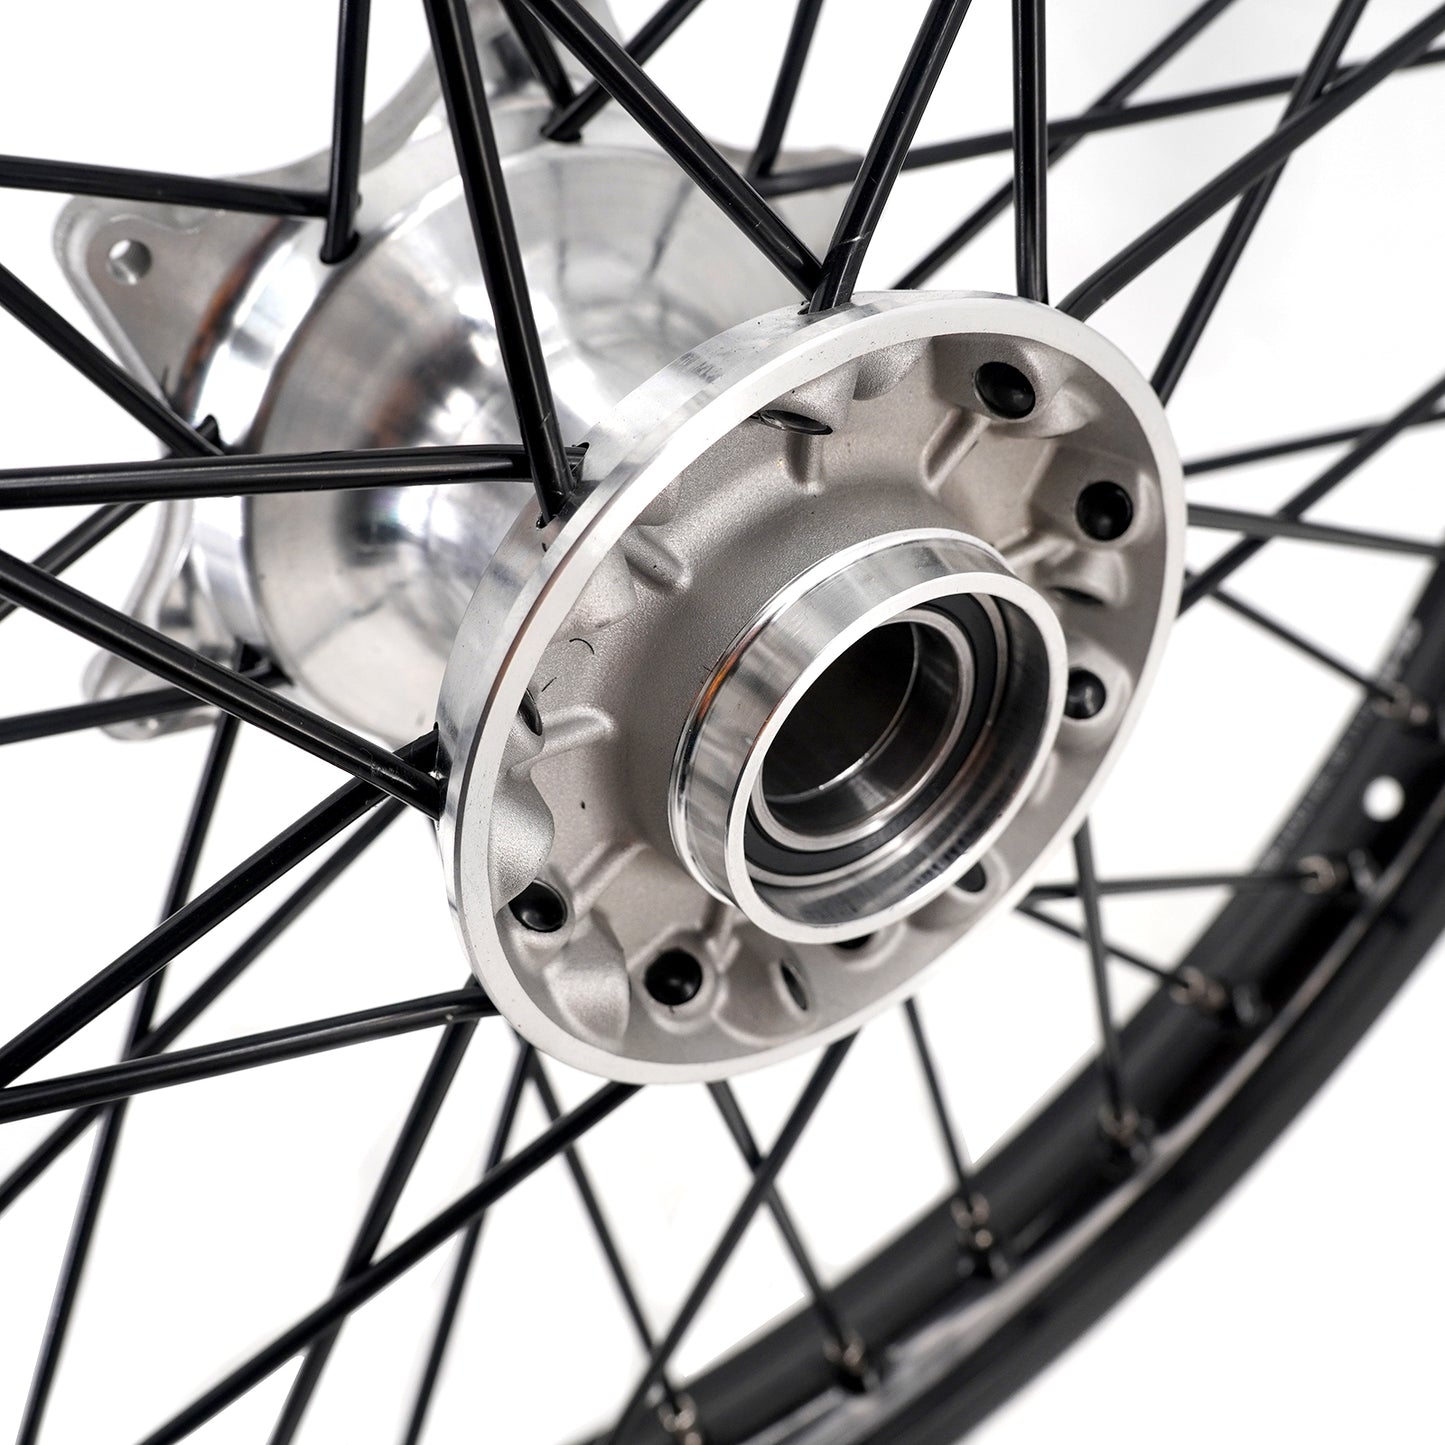 KKE Enduro 1.6*21" & 2.15*18" Cast Hub Electric Dirtbike Alloy Wheels Rims Fit STARK VARG